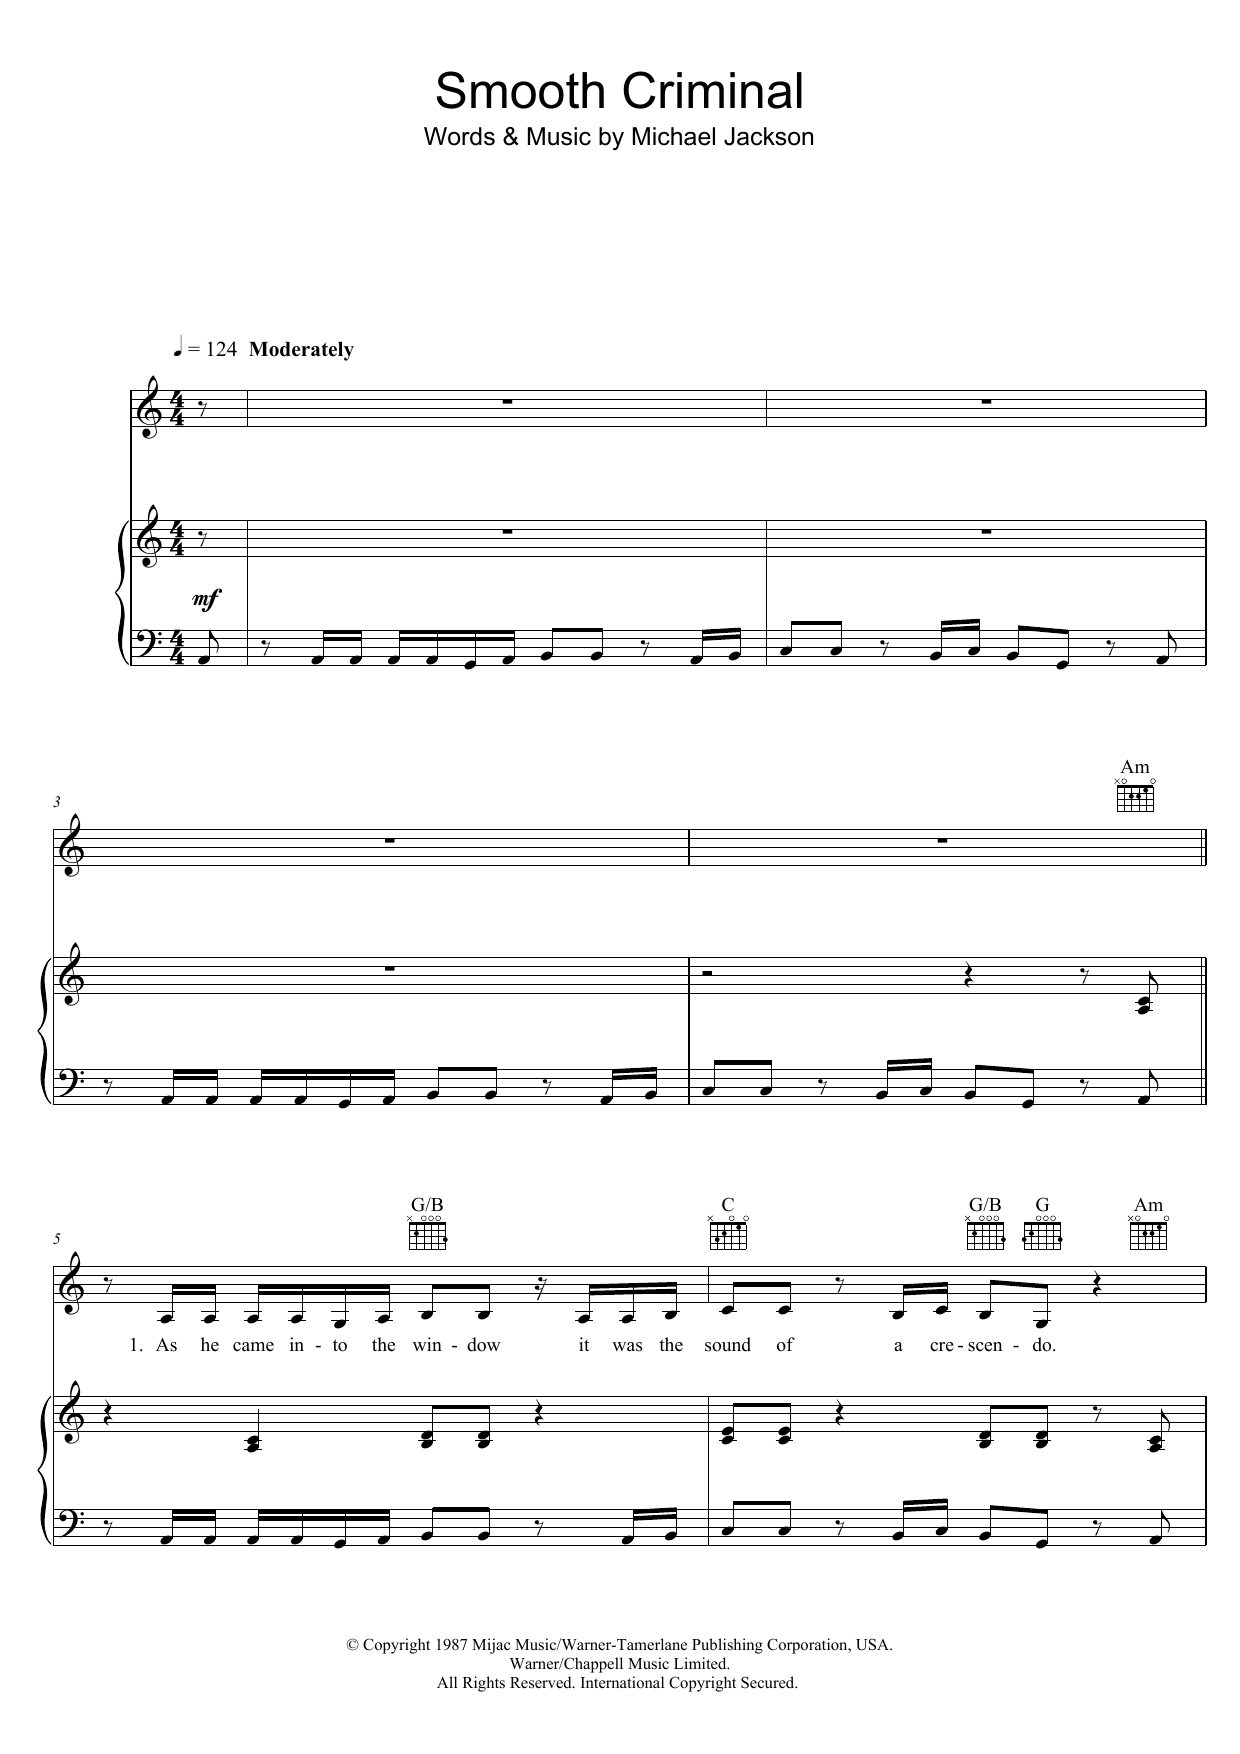 Michael Jackson Smooth Criminal Sheet Music Notes & Chords for Lyrics & Chords - Download or Print PDF